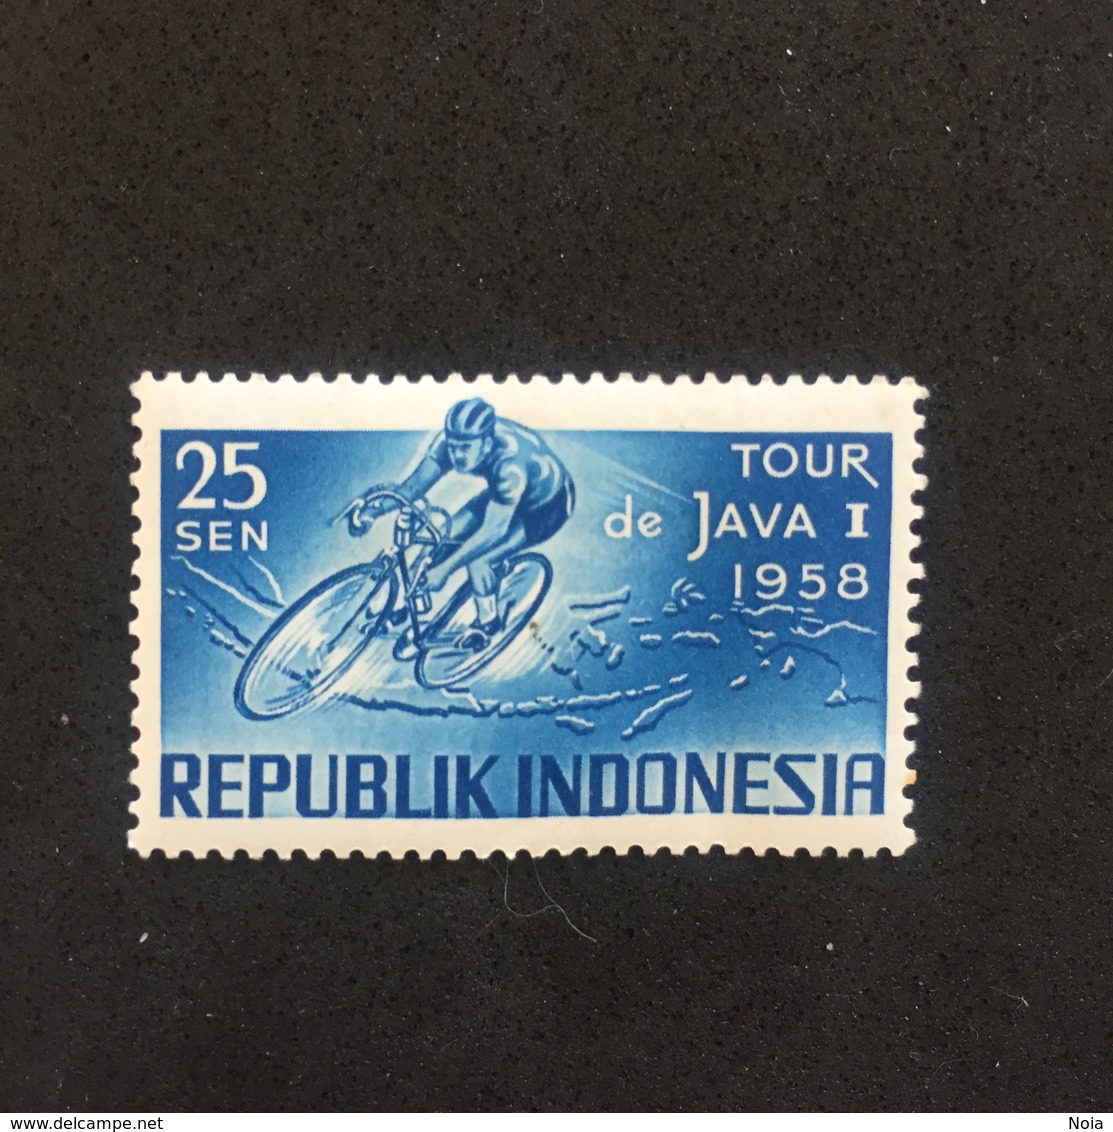 INDONESIA. JAVA TOUR 1958. MNH. C3703A - Wielrennen